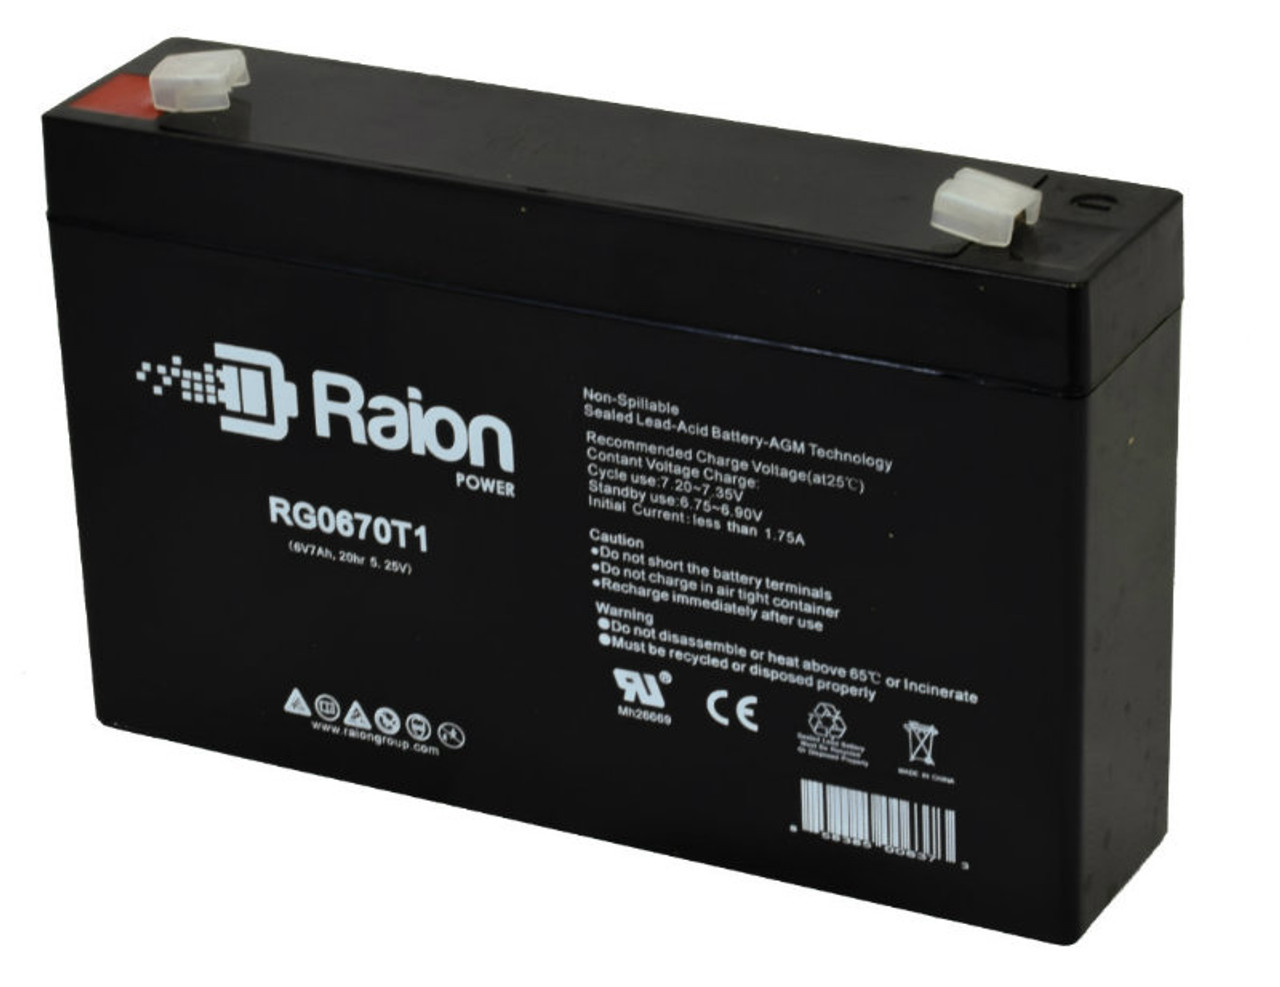 Raion Power RG0670T1 6V 7Ah Replacement Emergency Lighting Battery for Sure-Lites / Cooper Lighting SL-26-89